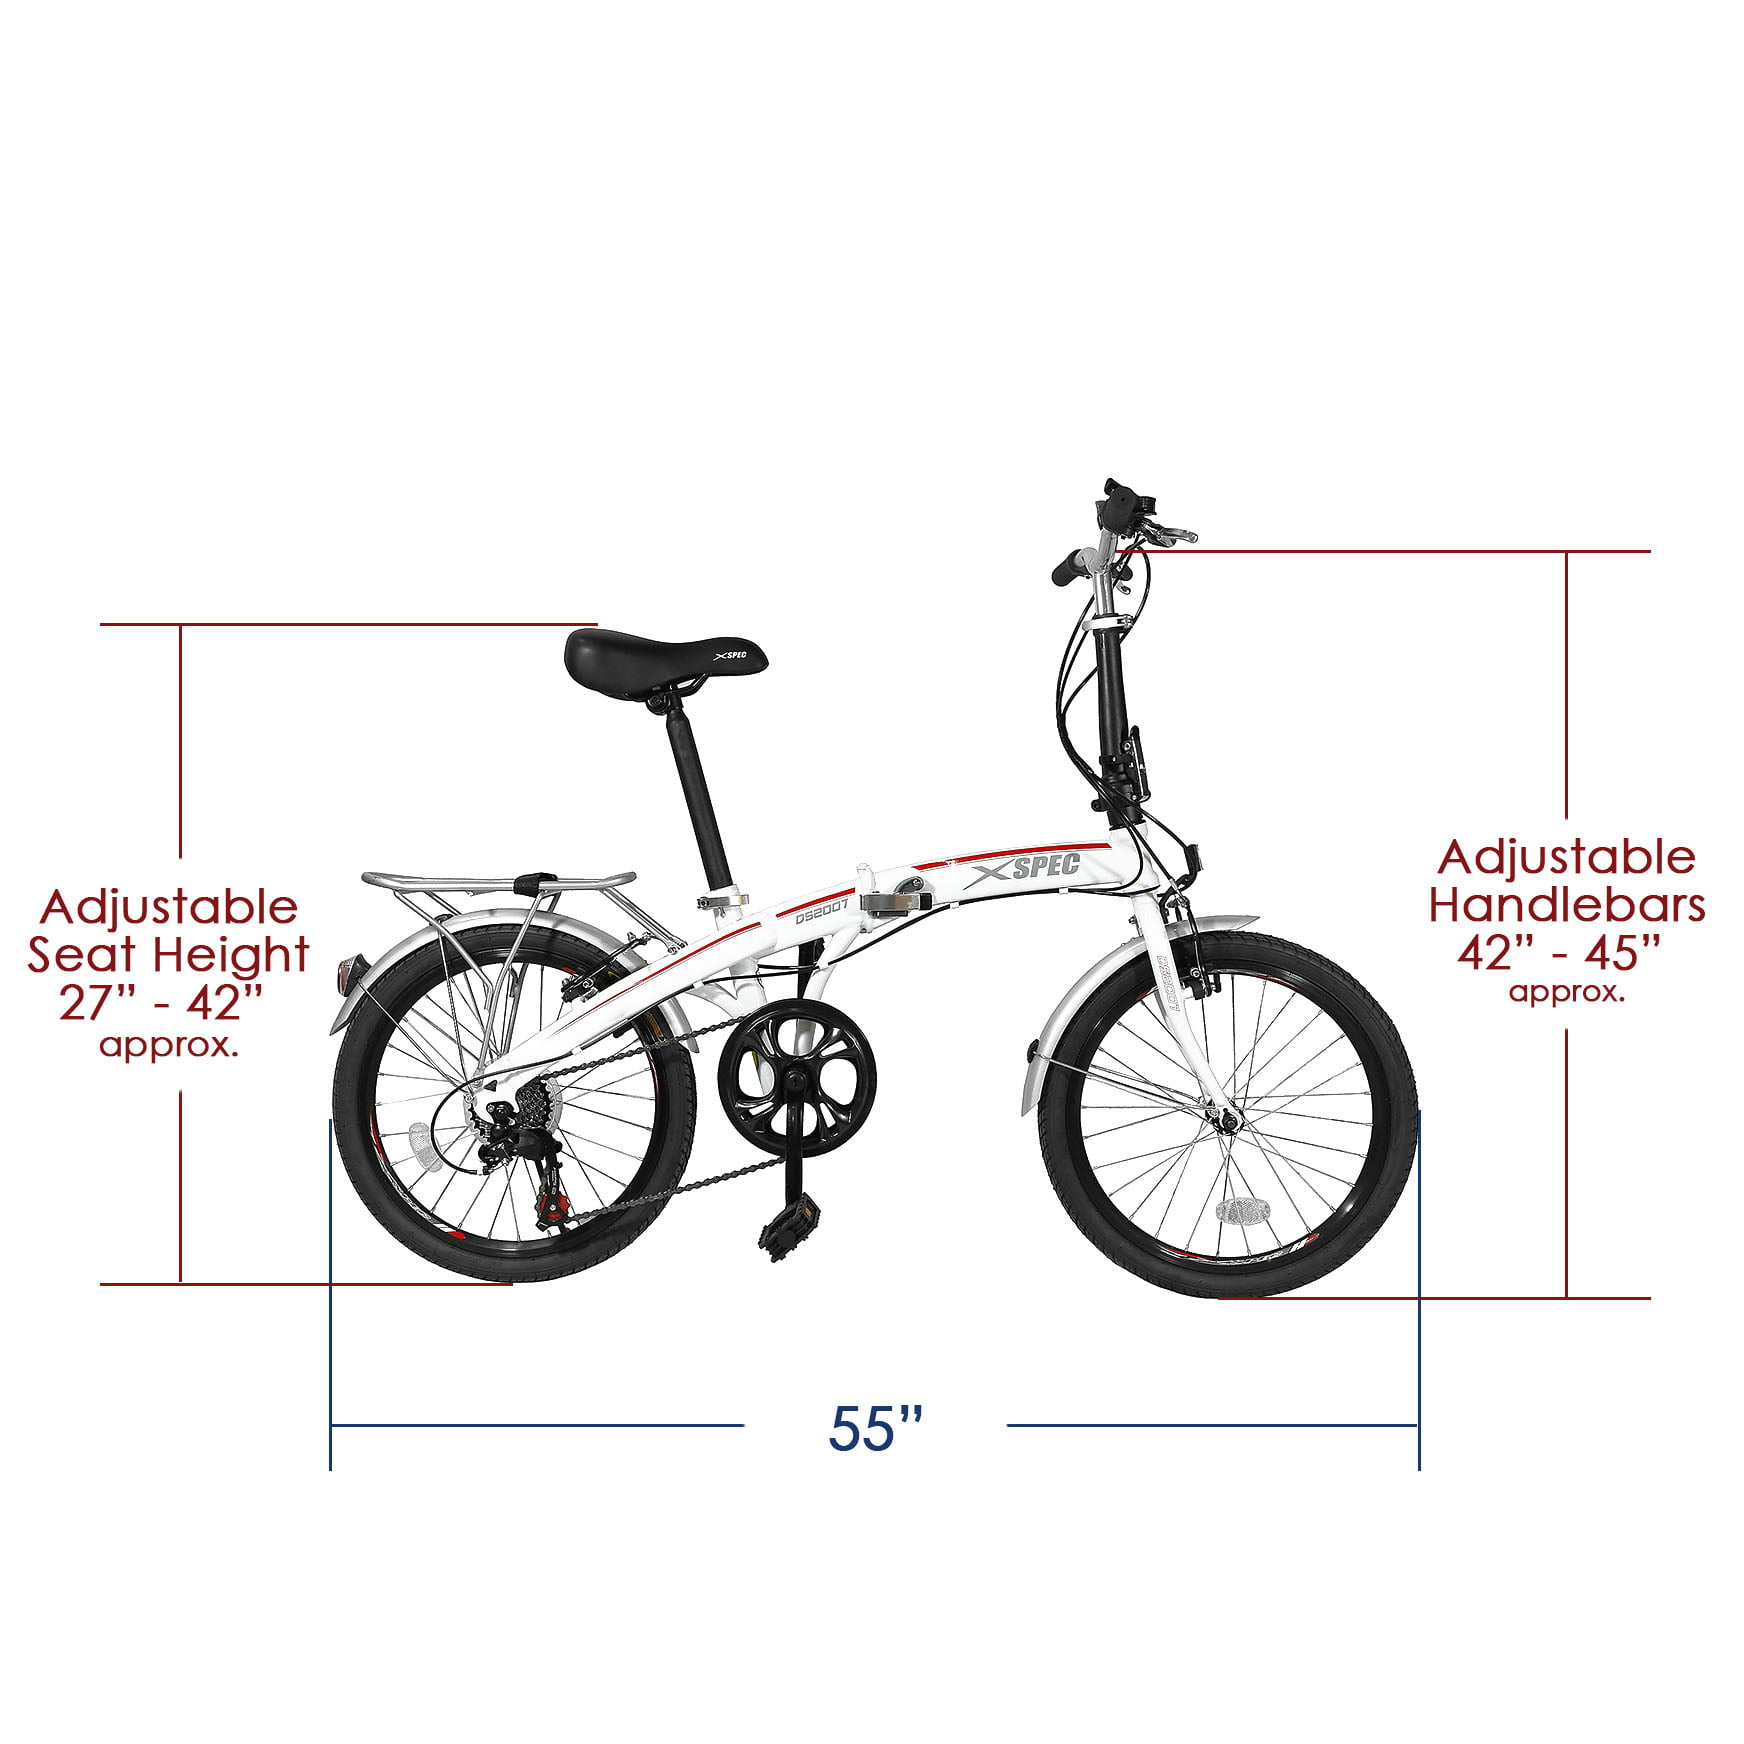 Black Xspec 20" 7 Speed City Folding Mini Compact Bike Bicycle Commuter 